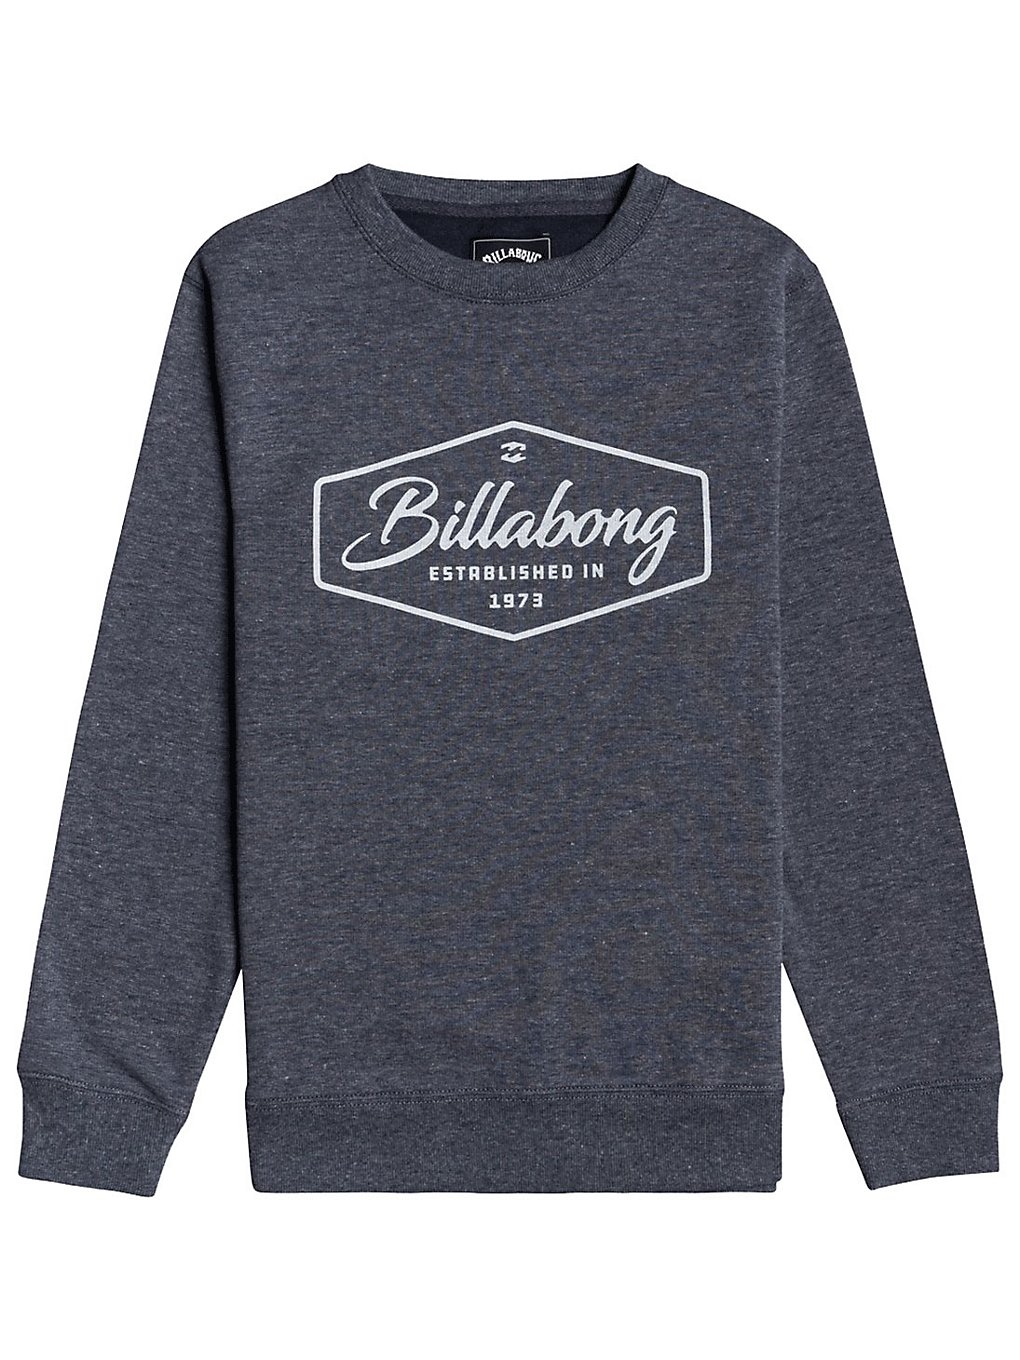 Billabong Trademark Crew Sweater navy